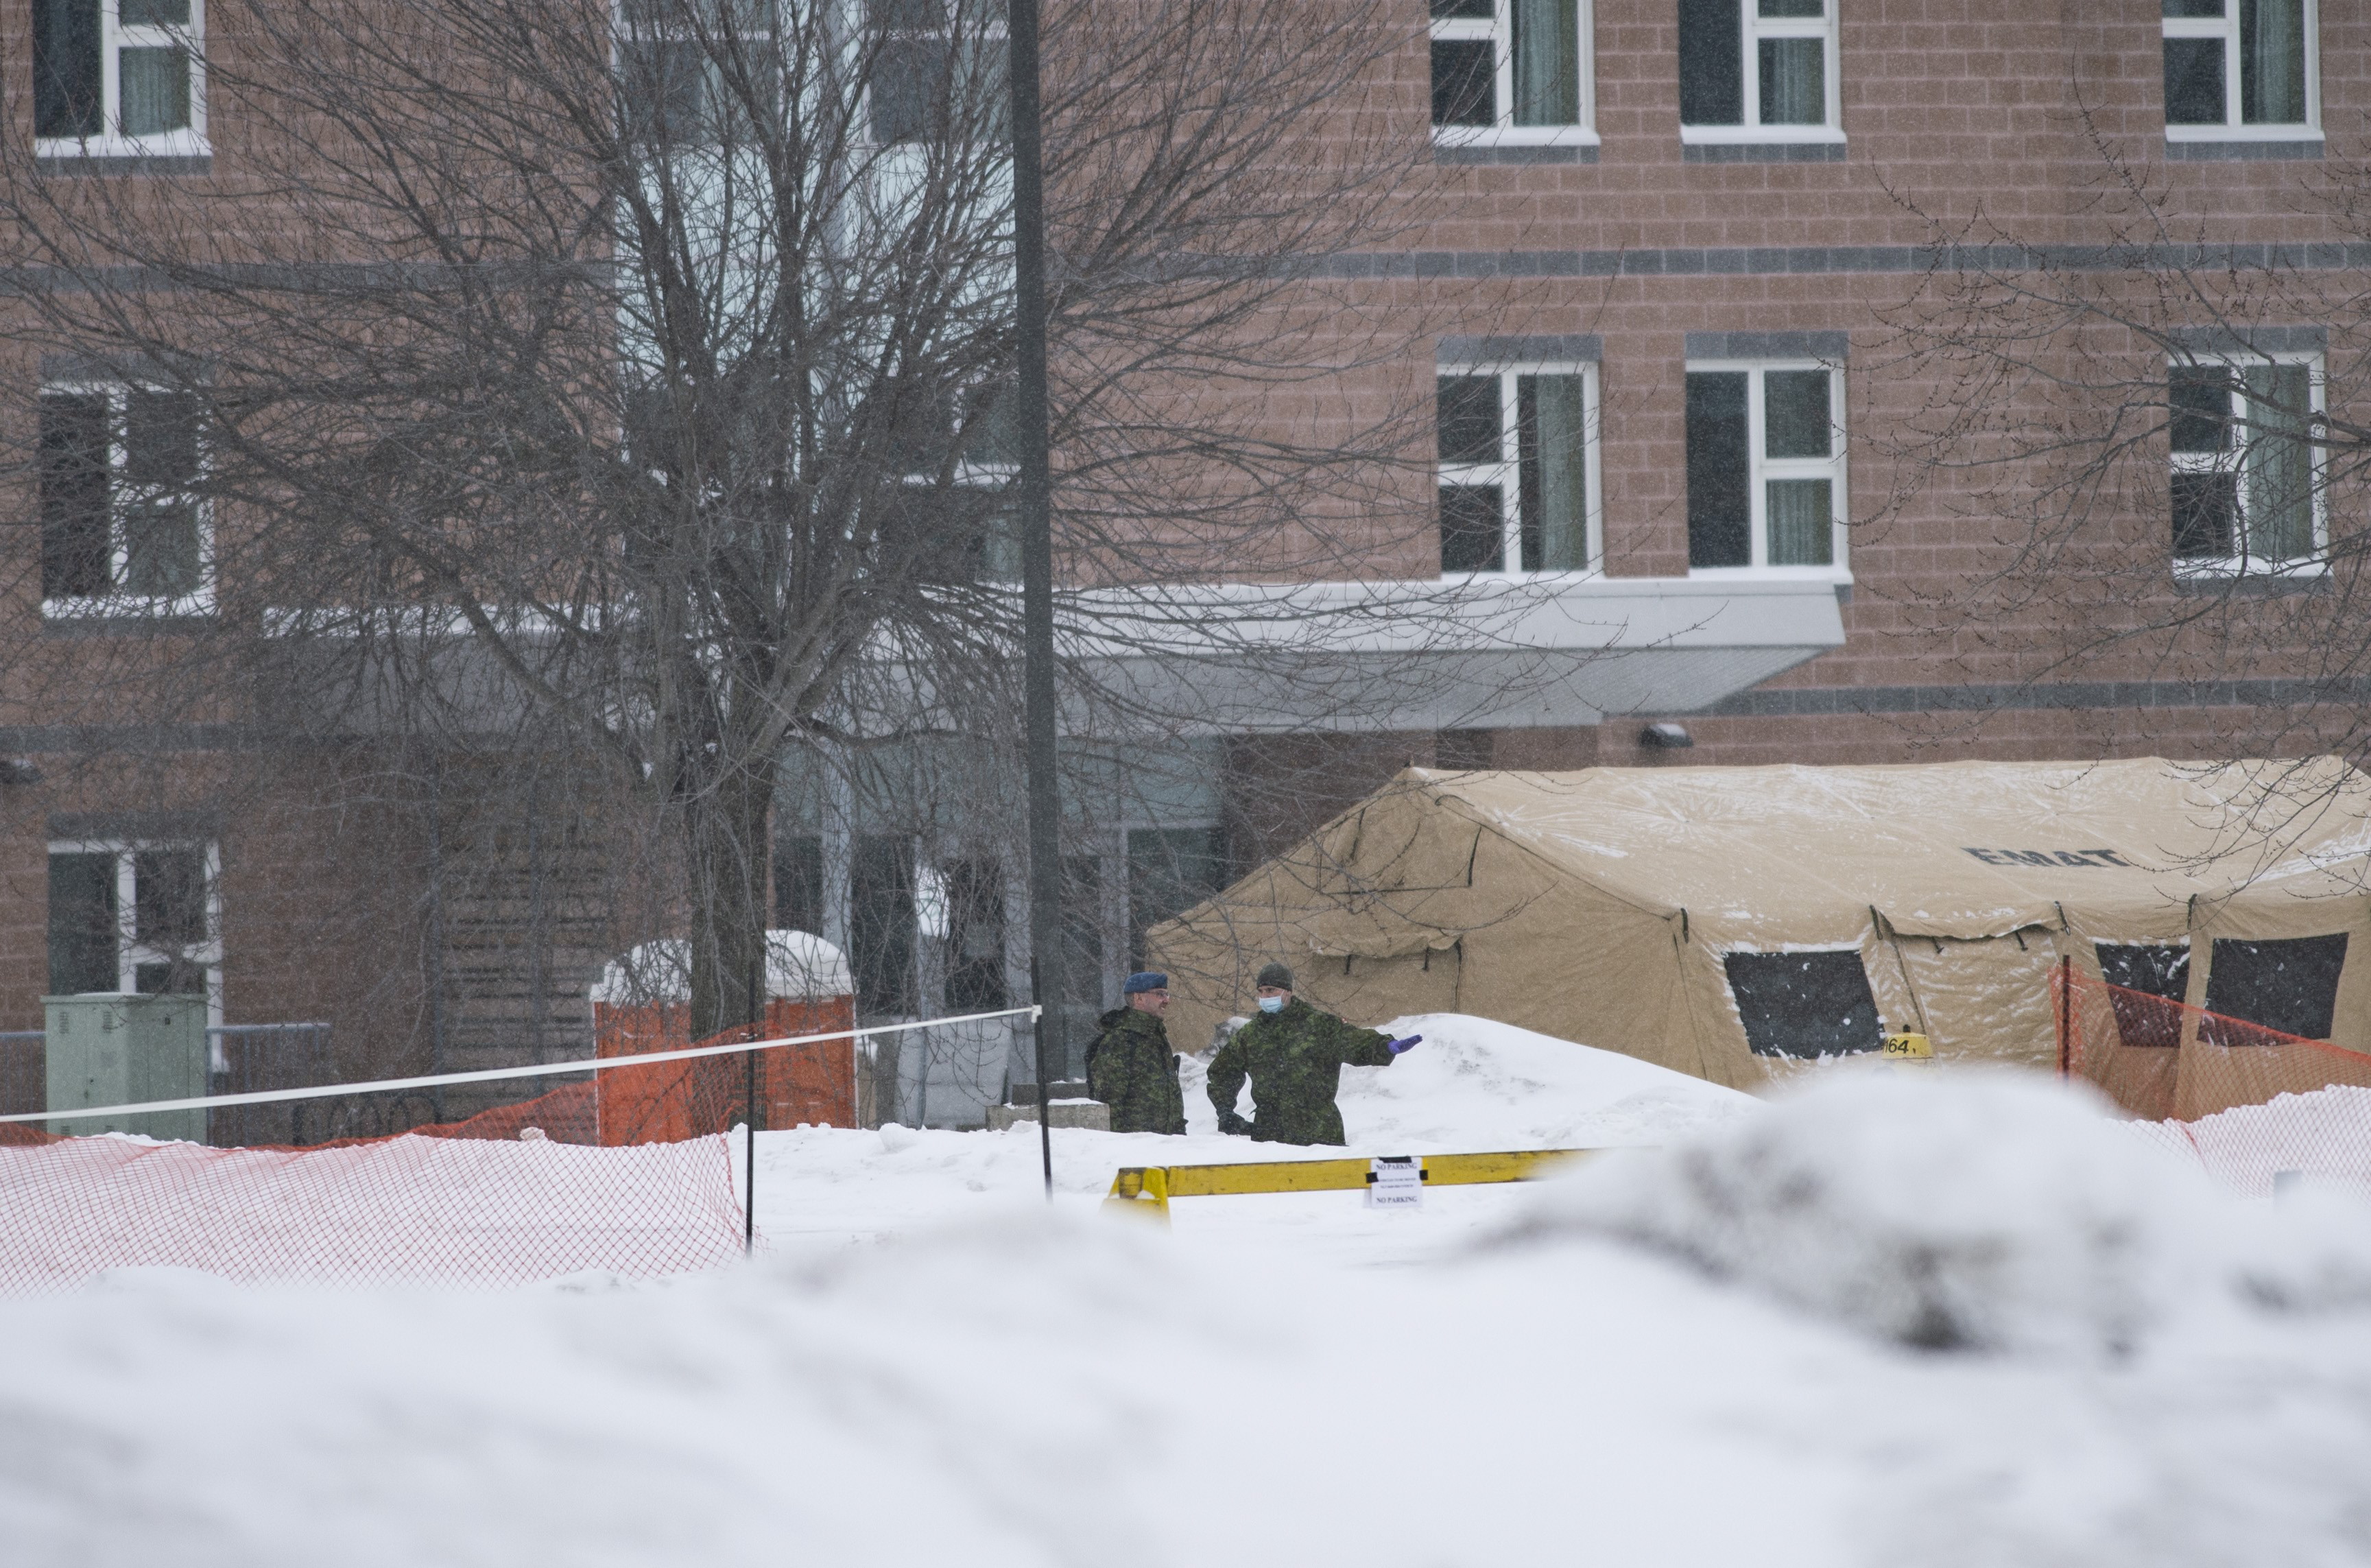 Canada S Health Minister To Visit Cfb Trenton Where Hundreds Under Quarantine National Globalnews Ca